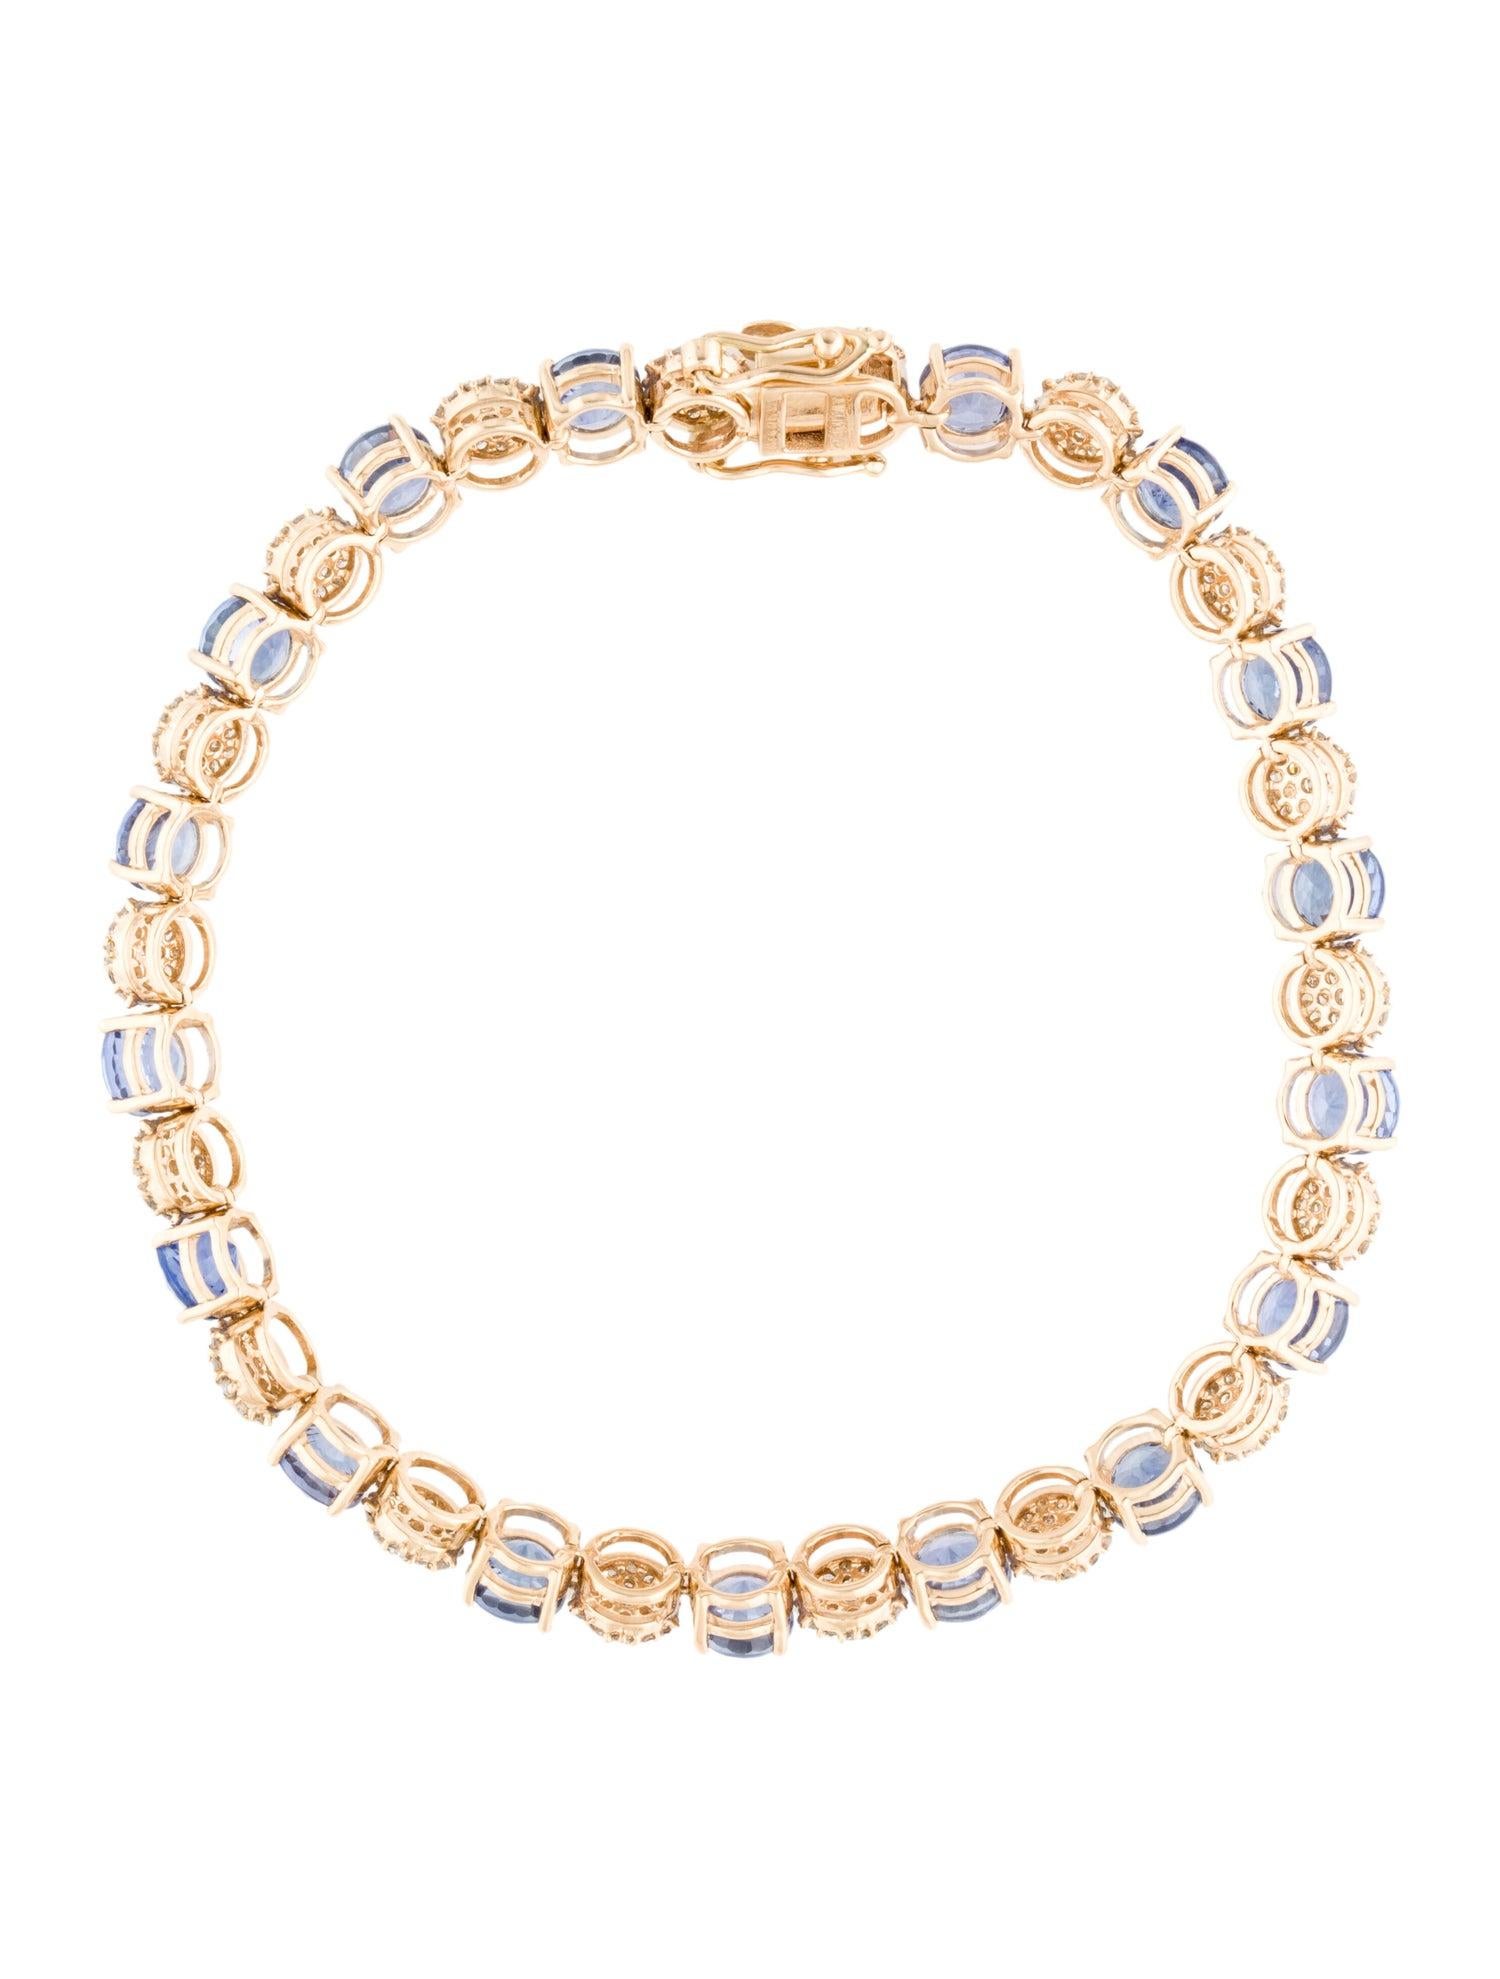 Brilliant Cut 14K Sapphire & Diamond Tennis Bracelet - Elegant Sparkle, Timeless Glamour For Sale